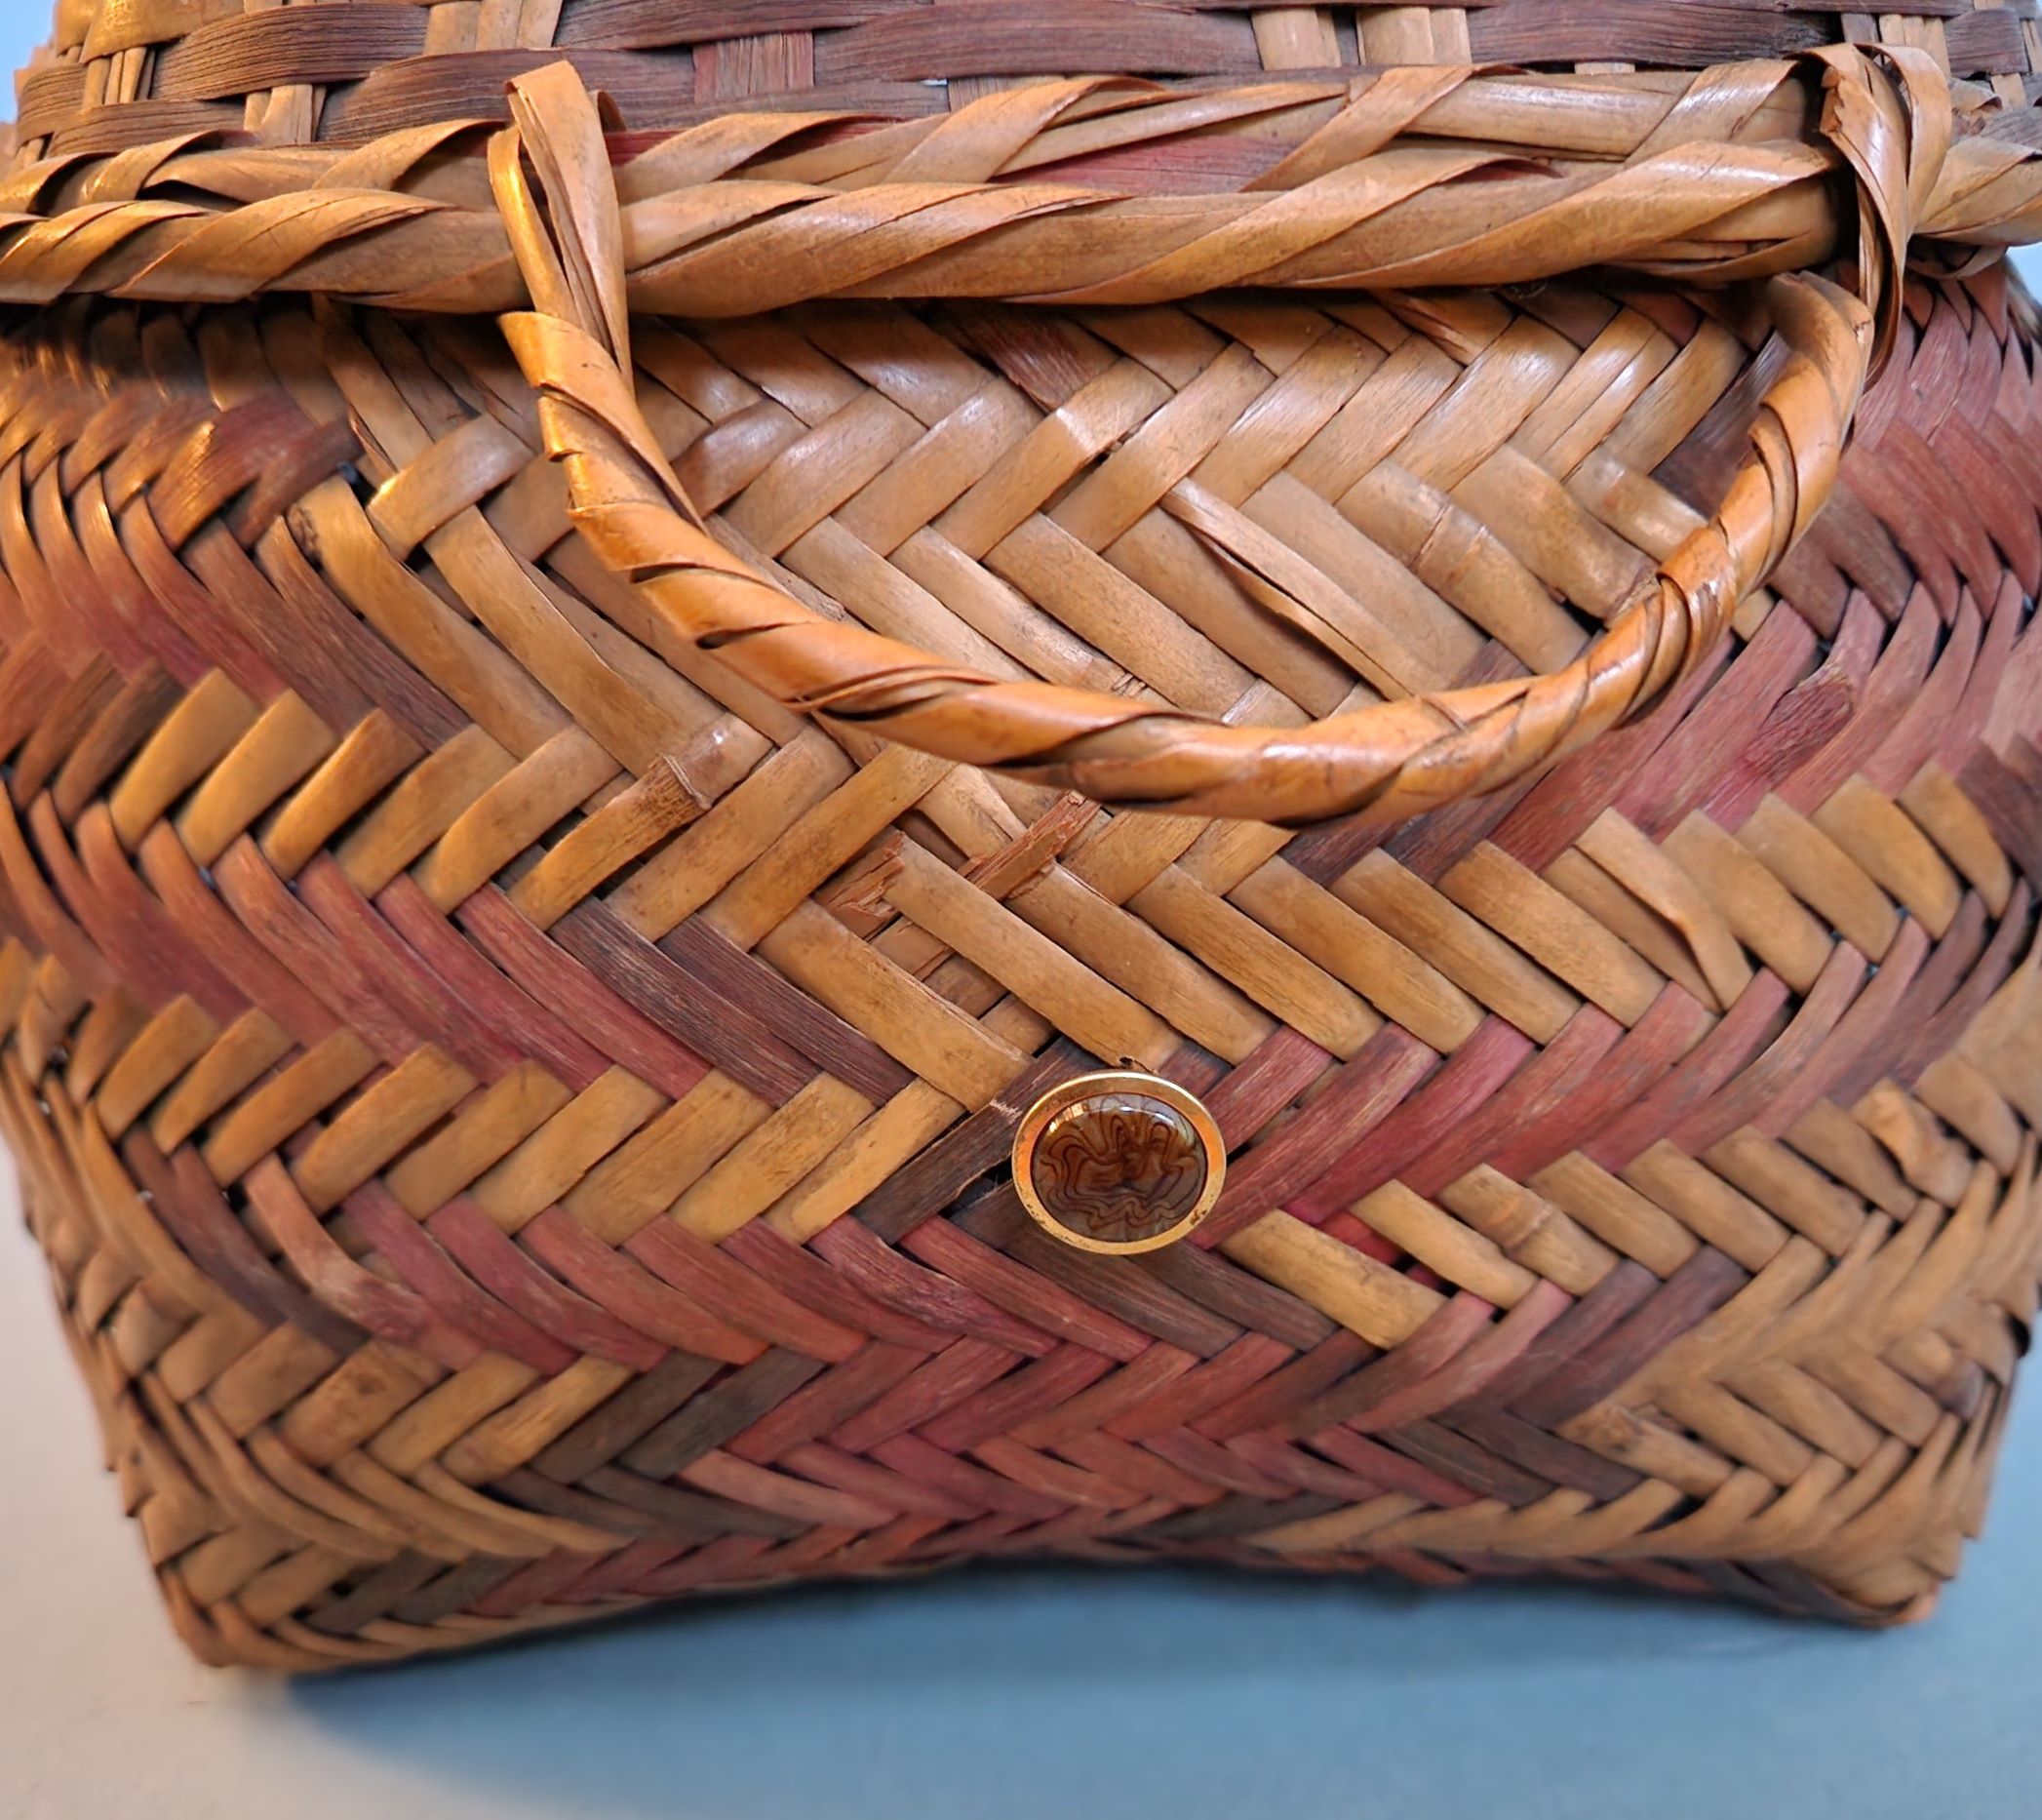 Choctaw basket with lid - cuff link - smaller.jpg